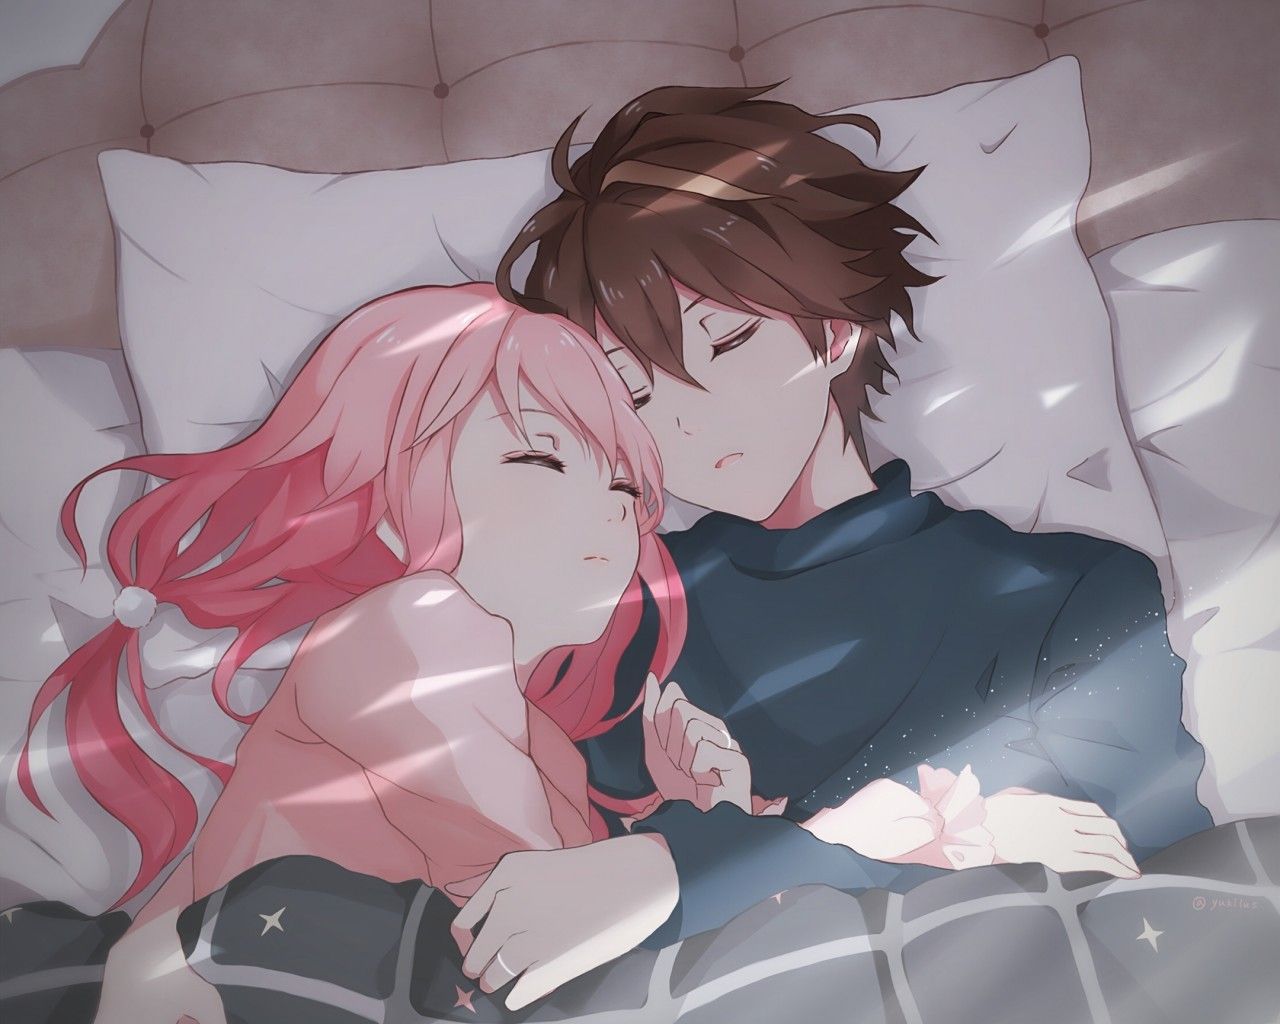 cute anime couples sleeping